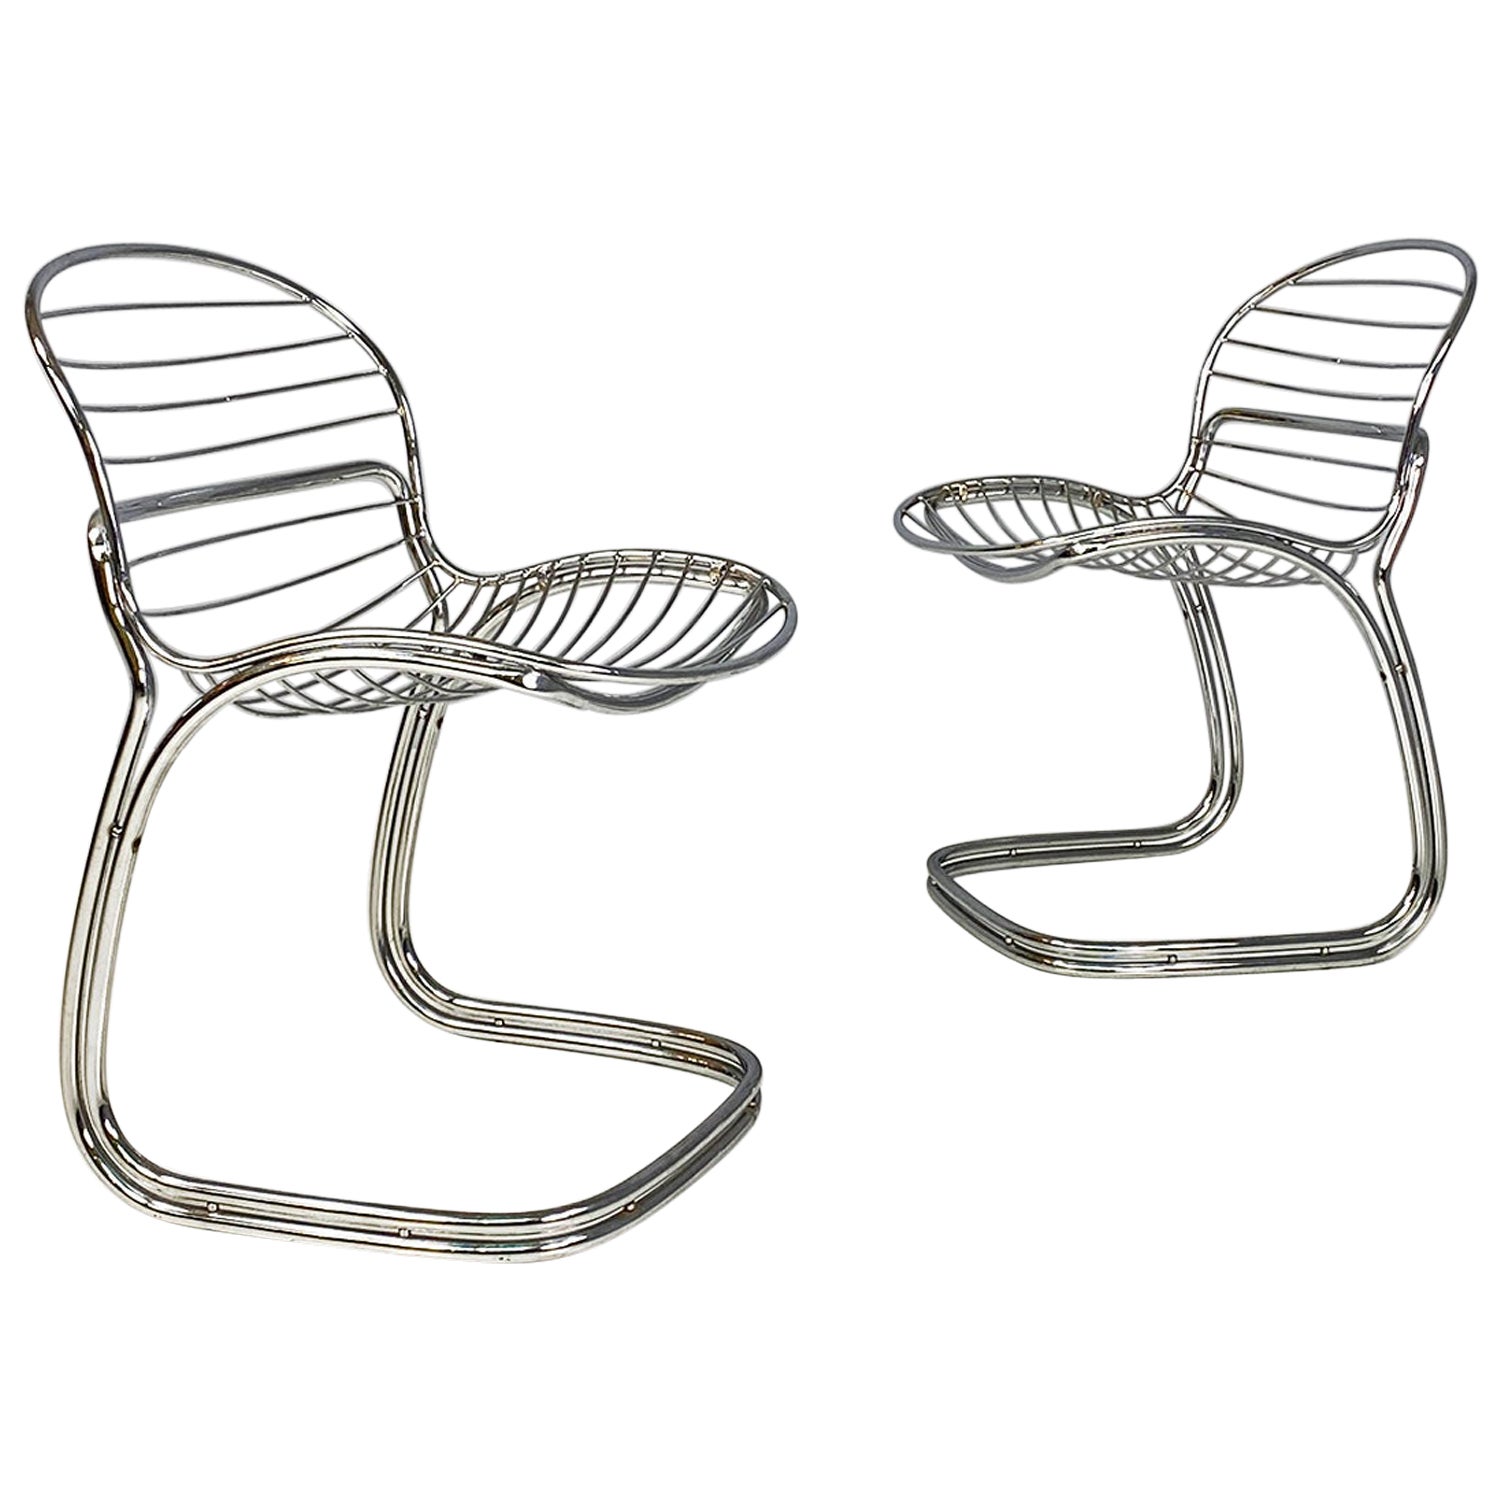 Italian modern chromed steel Sabrina chairs by Gastone Rinaldi for Rima, 1970s For Sale